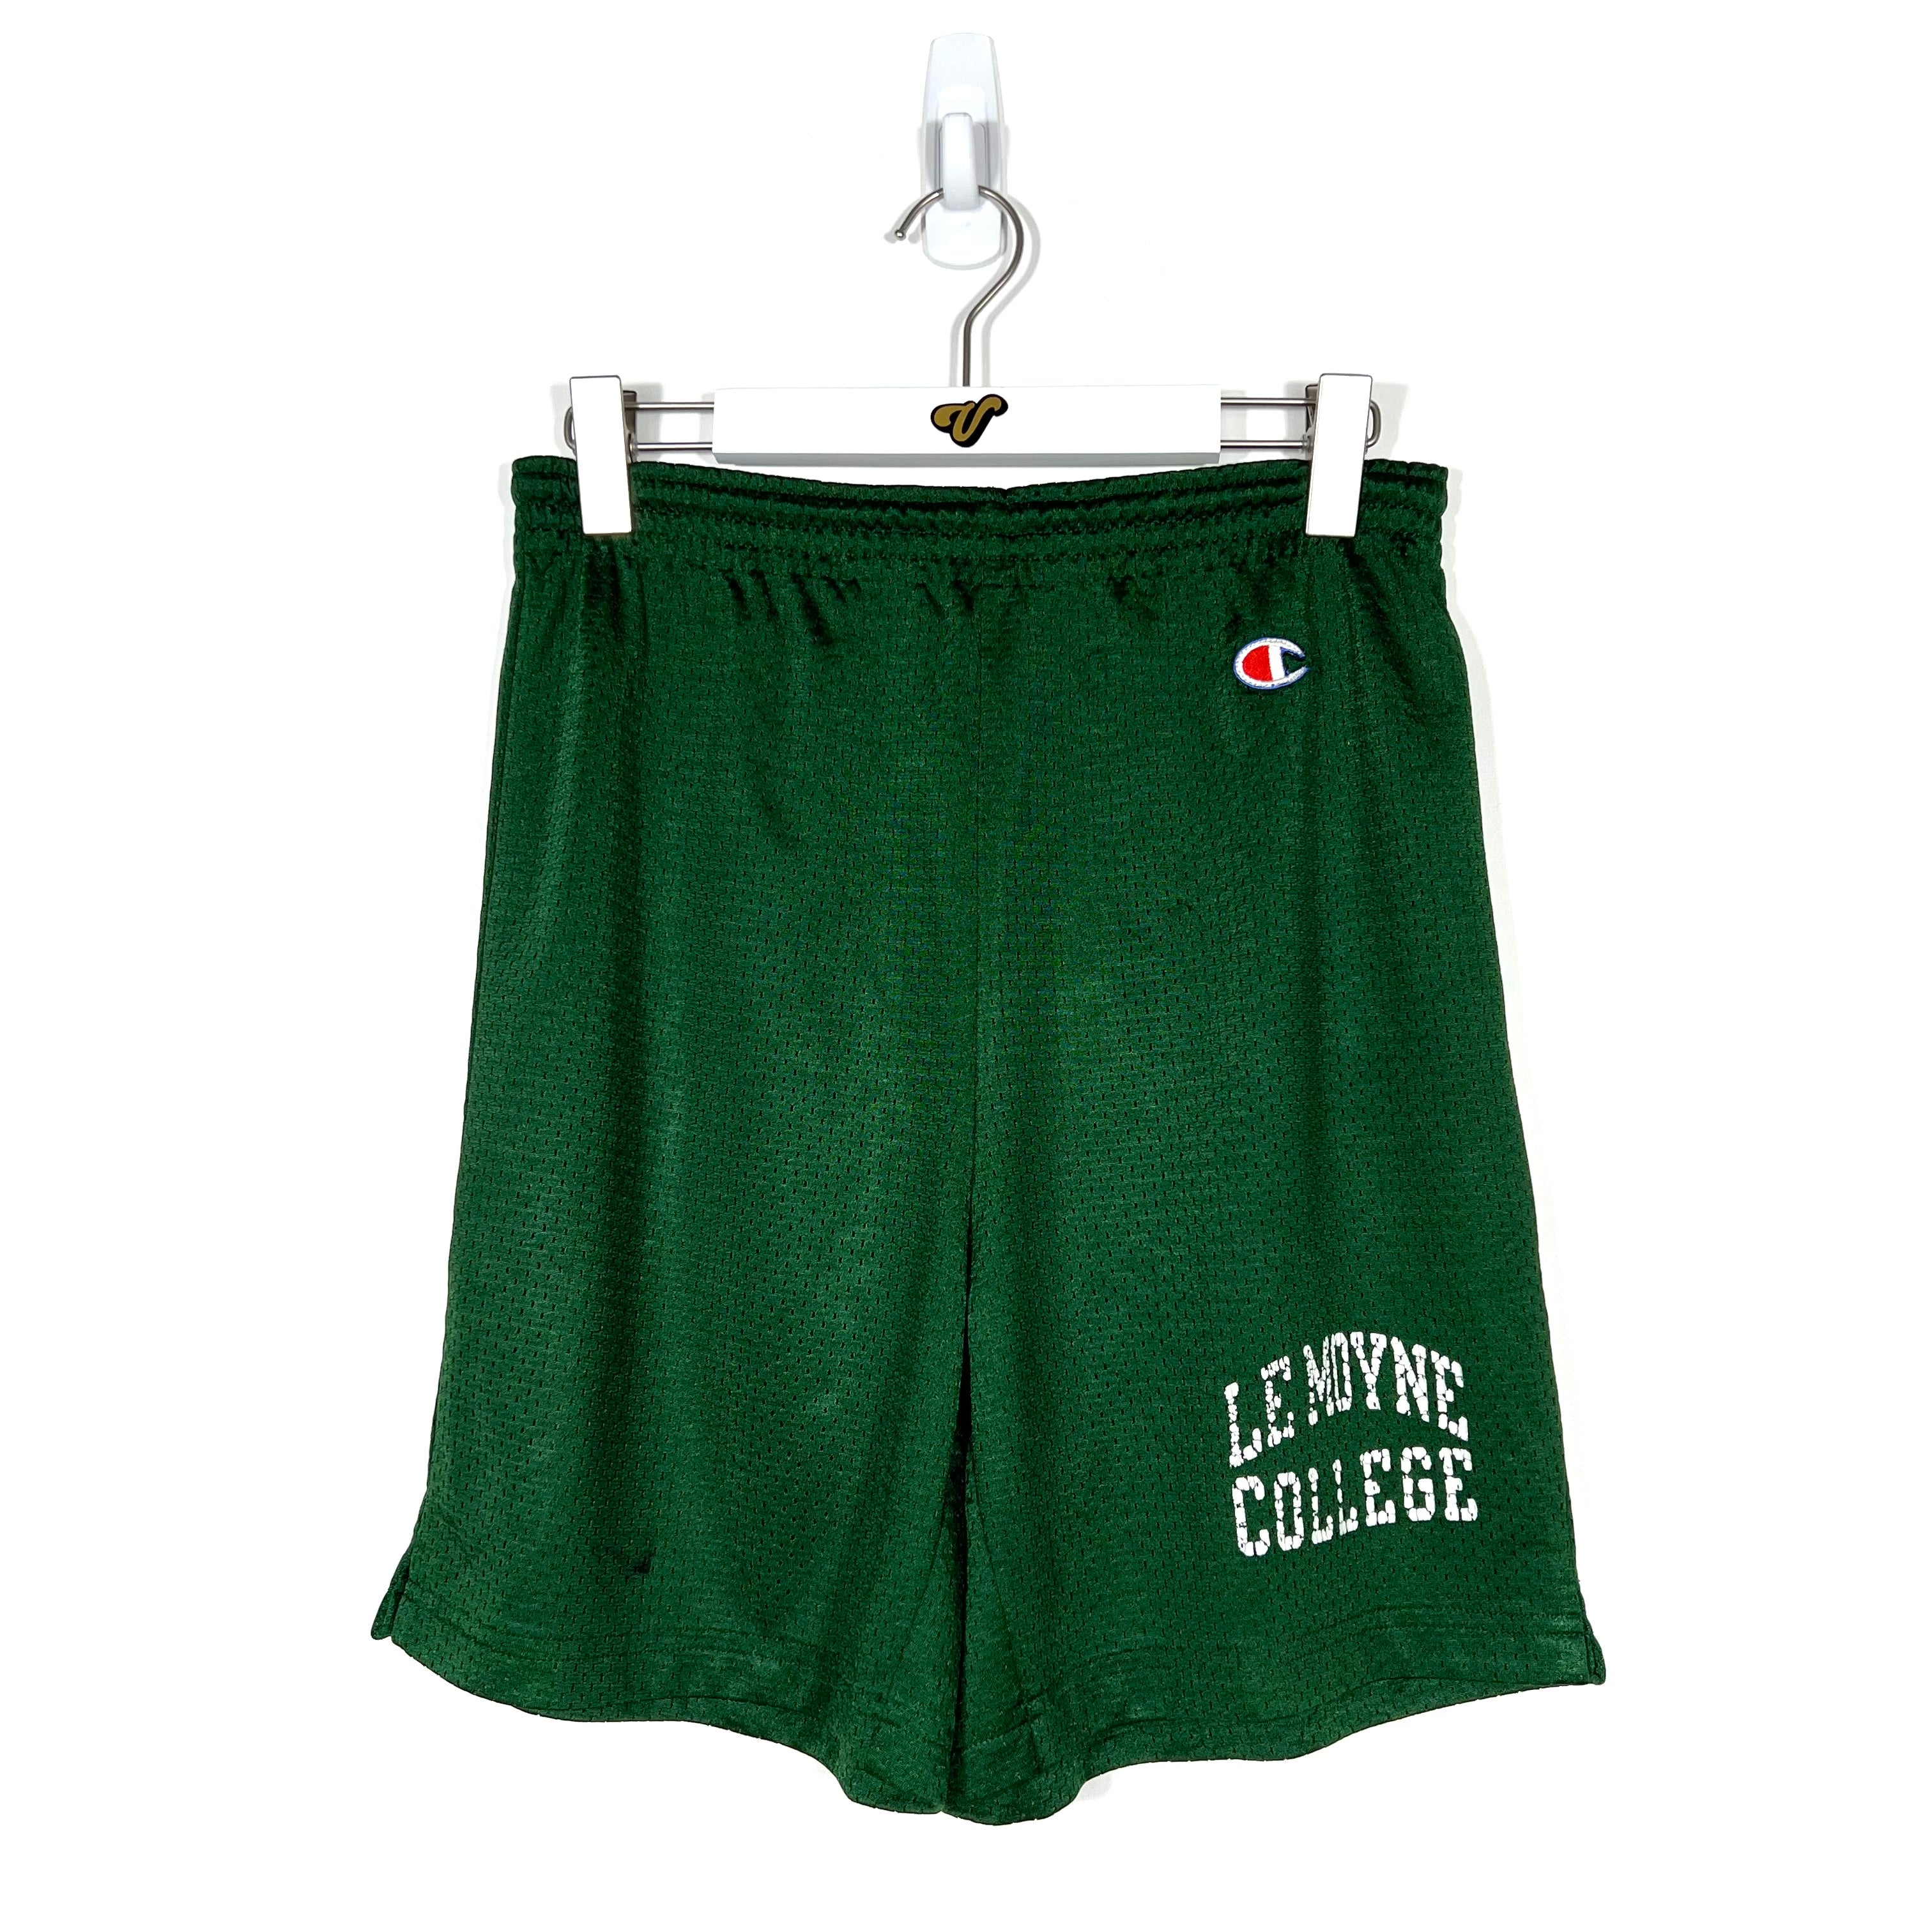 Vintage Champion Le Moyne College Mesh Shorts - Men's Small